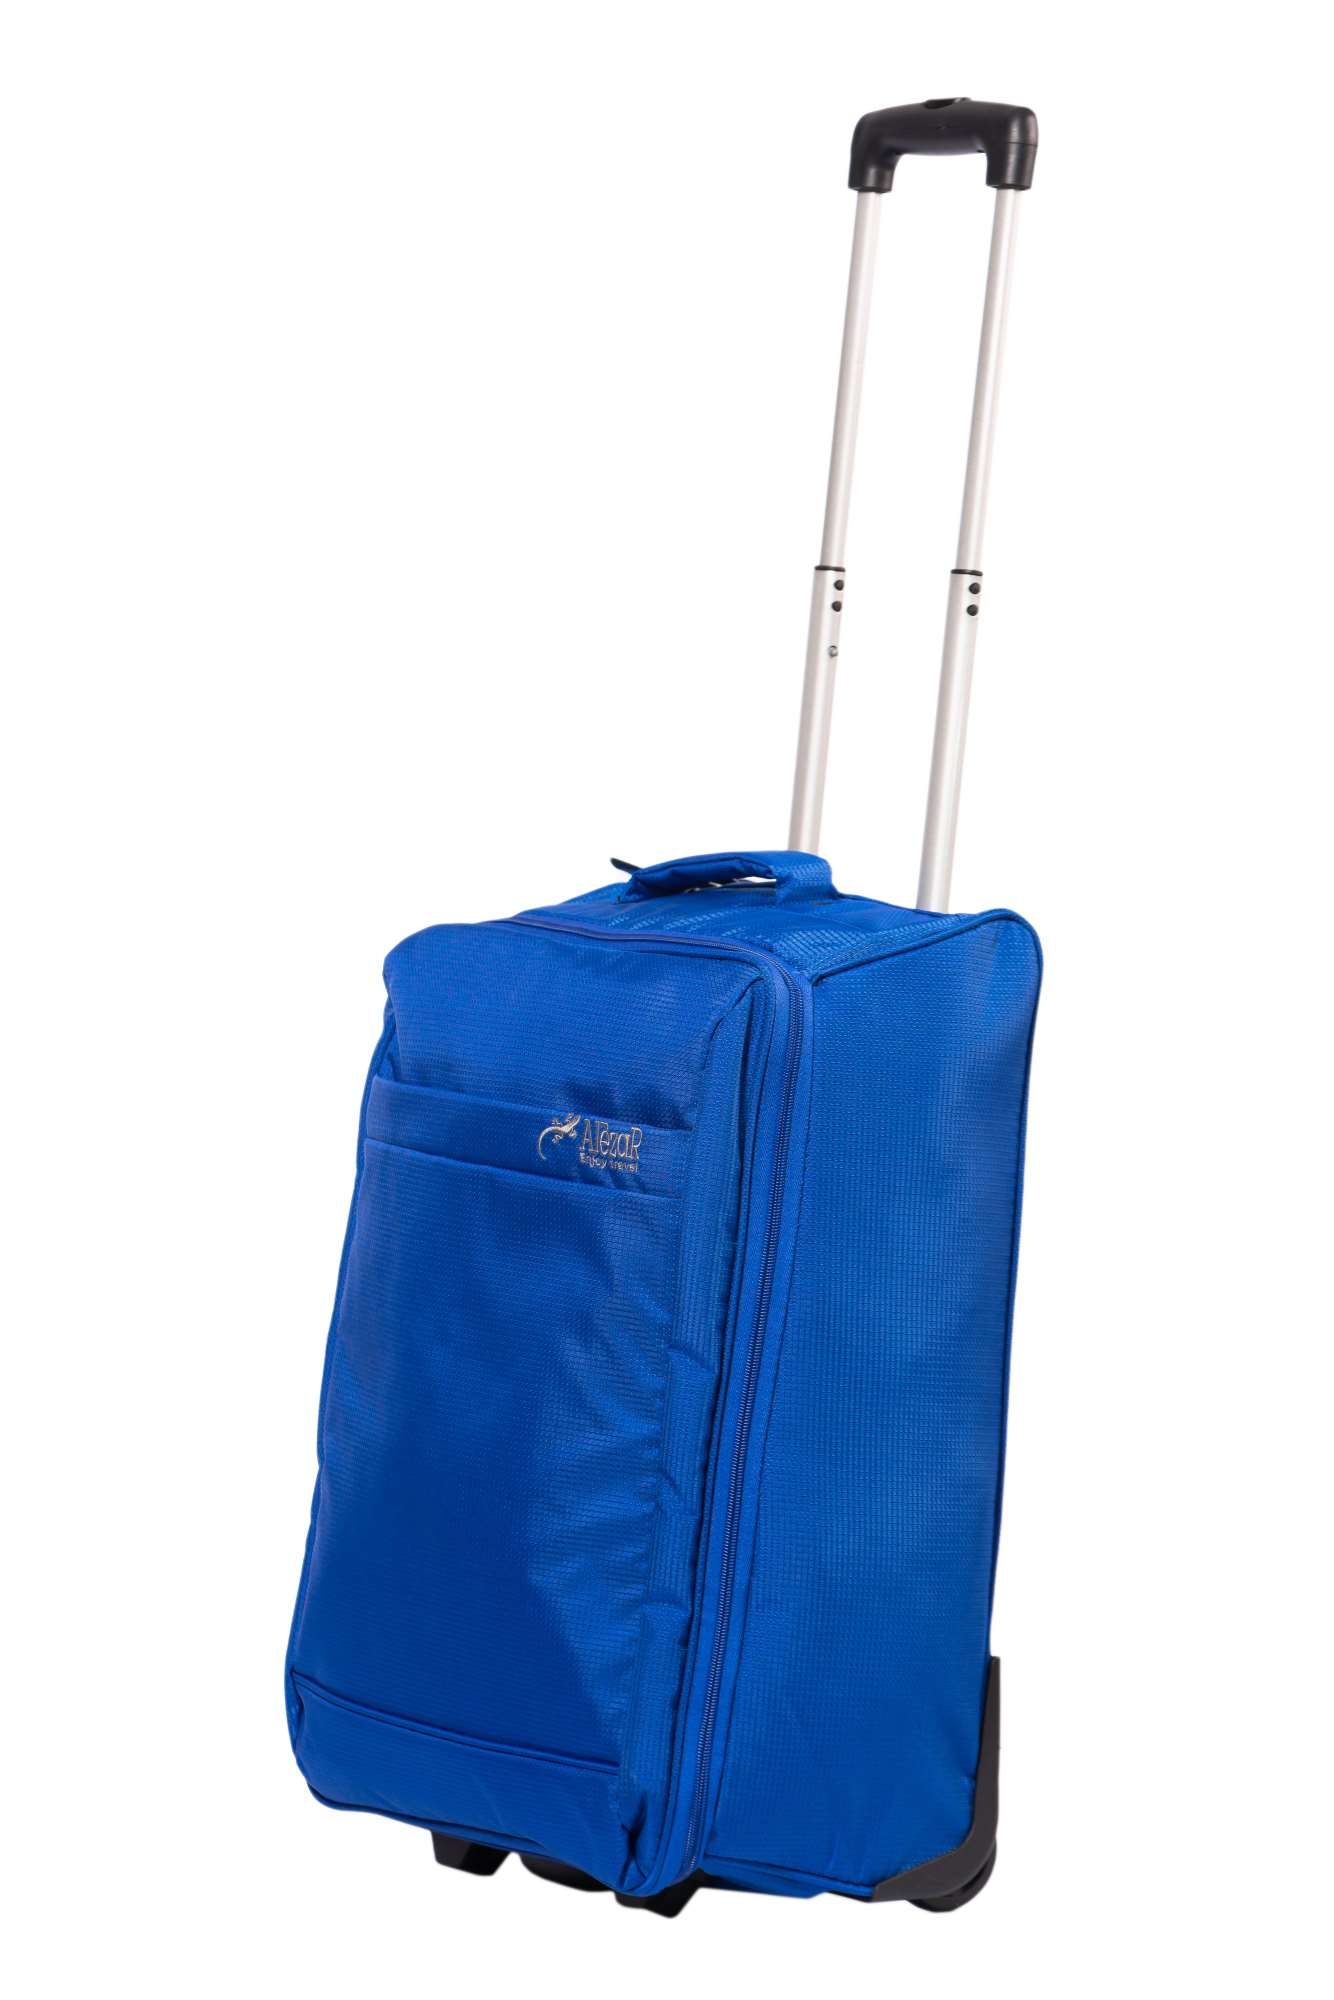 Alezar Cabin Size Travel Bag Blue 22"